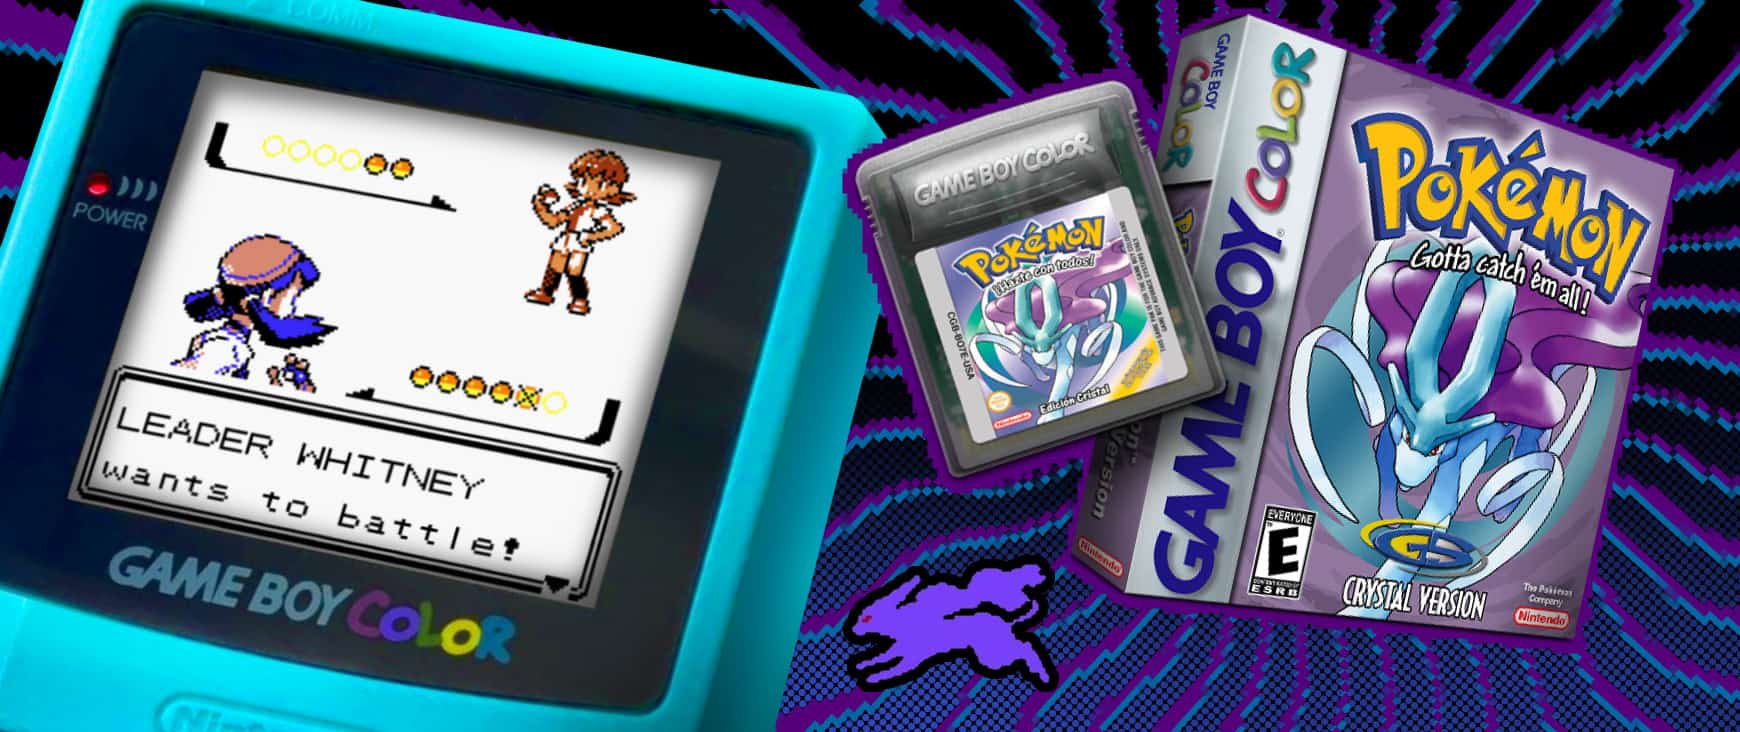 Pokémon Crystal for Game Boy Color